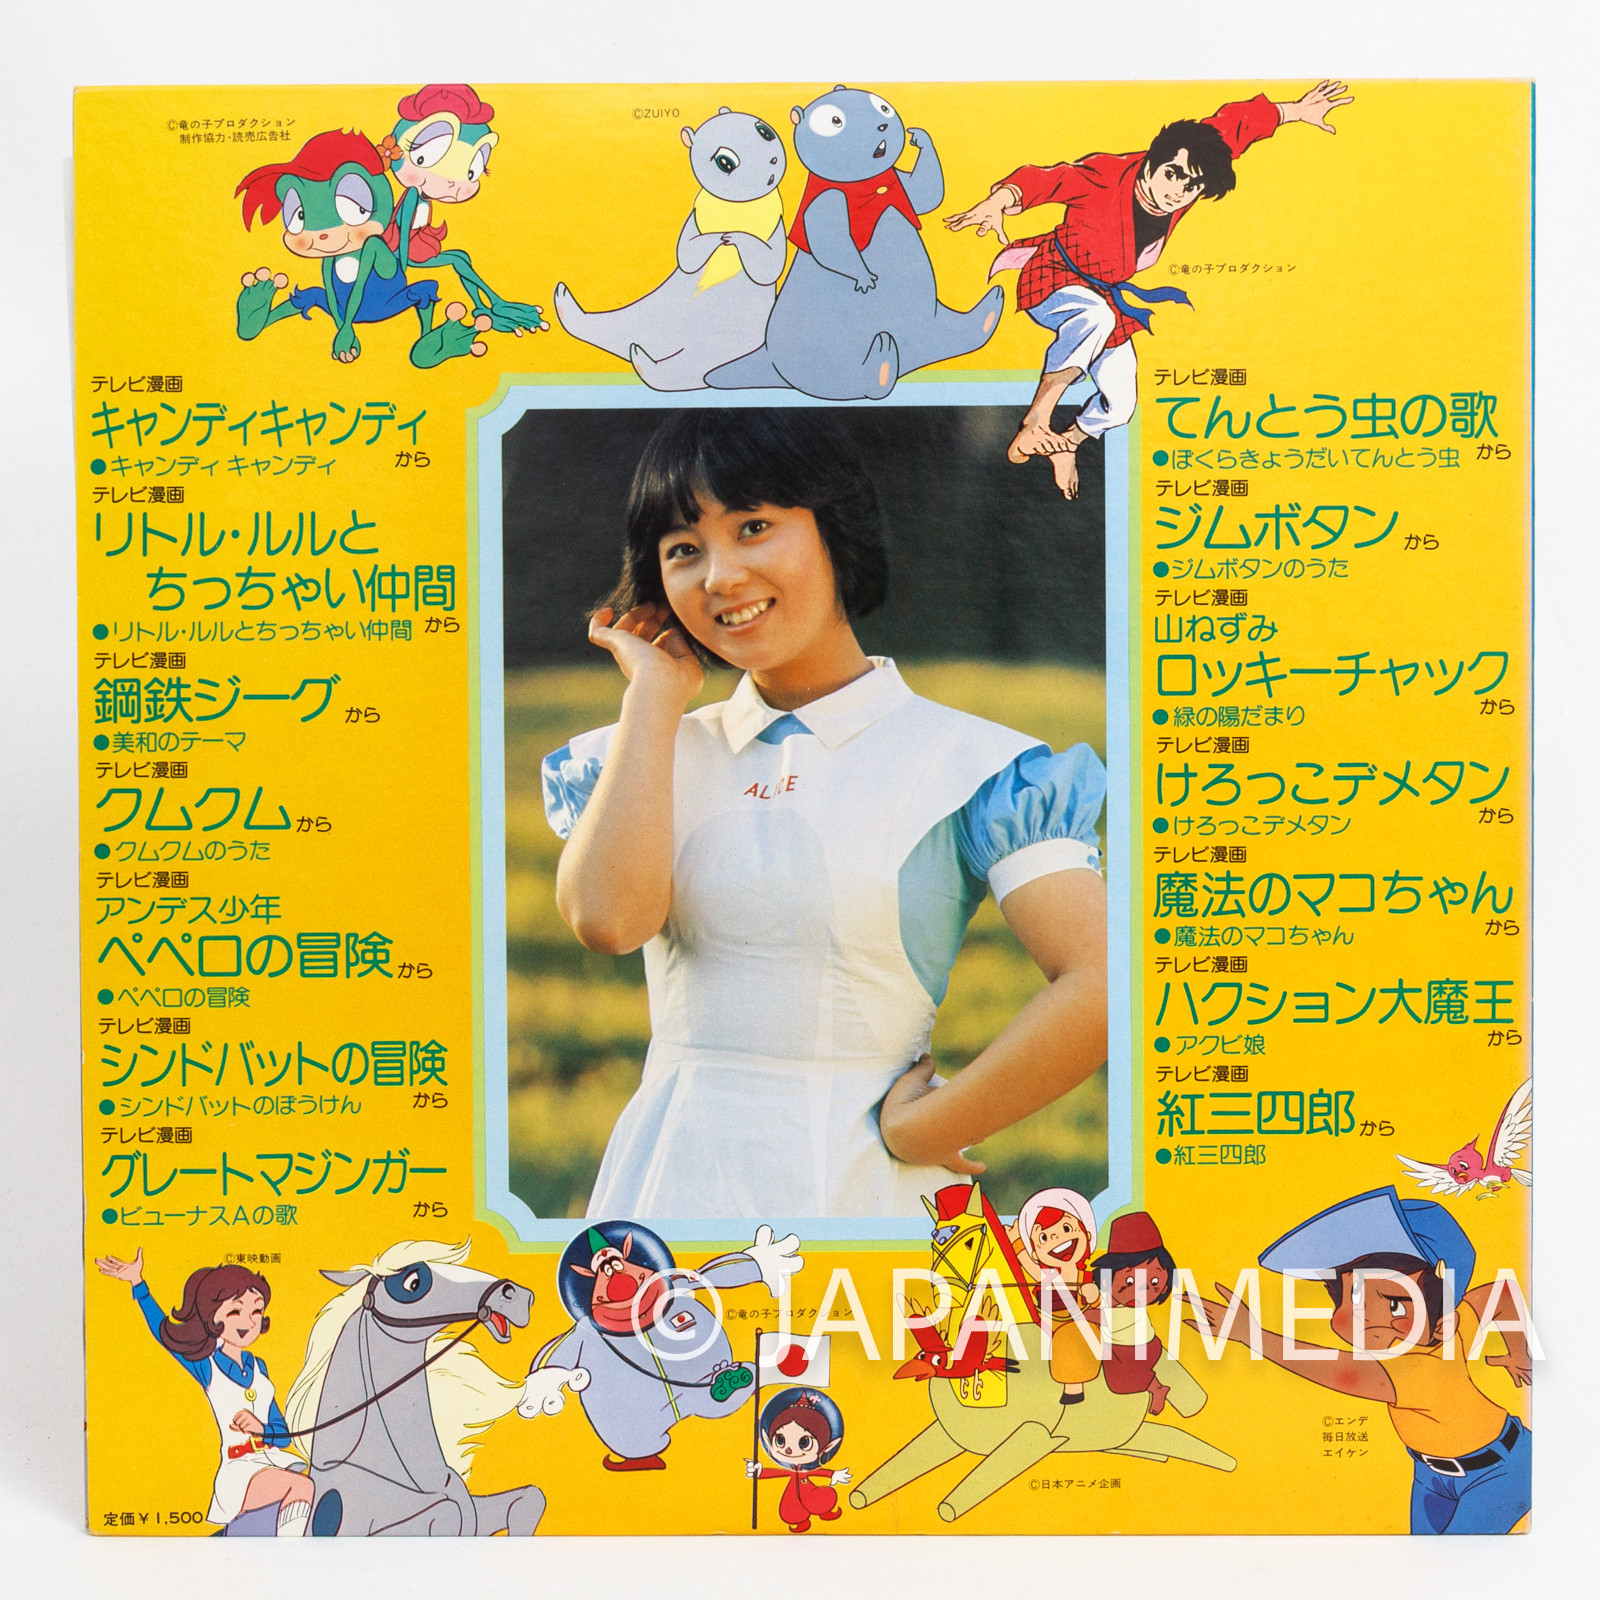 Mitsuko Horie World of TV Animation LP Vinyl Record CW-7117